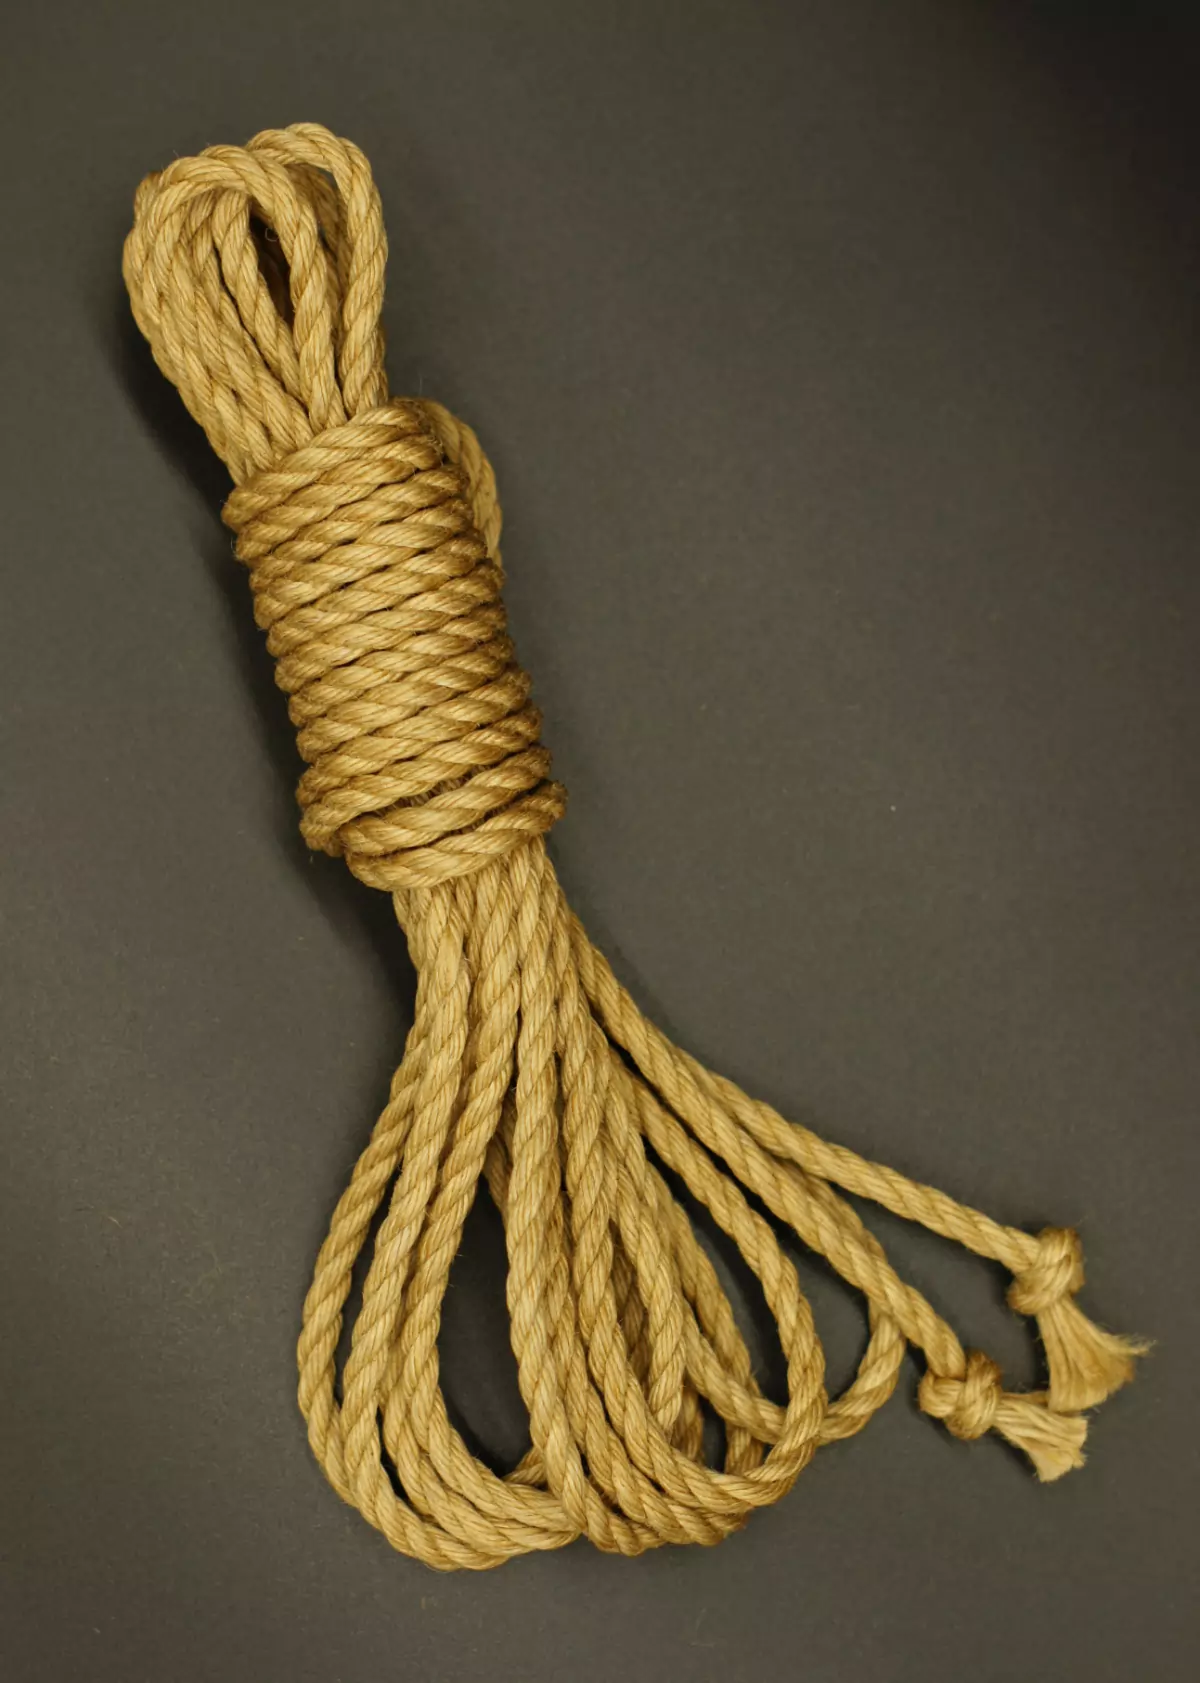  ∅ 5.5mm jute rope, ready-to-use, various lengths, vegan